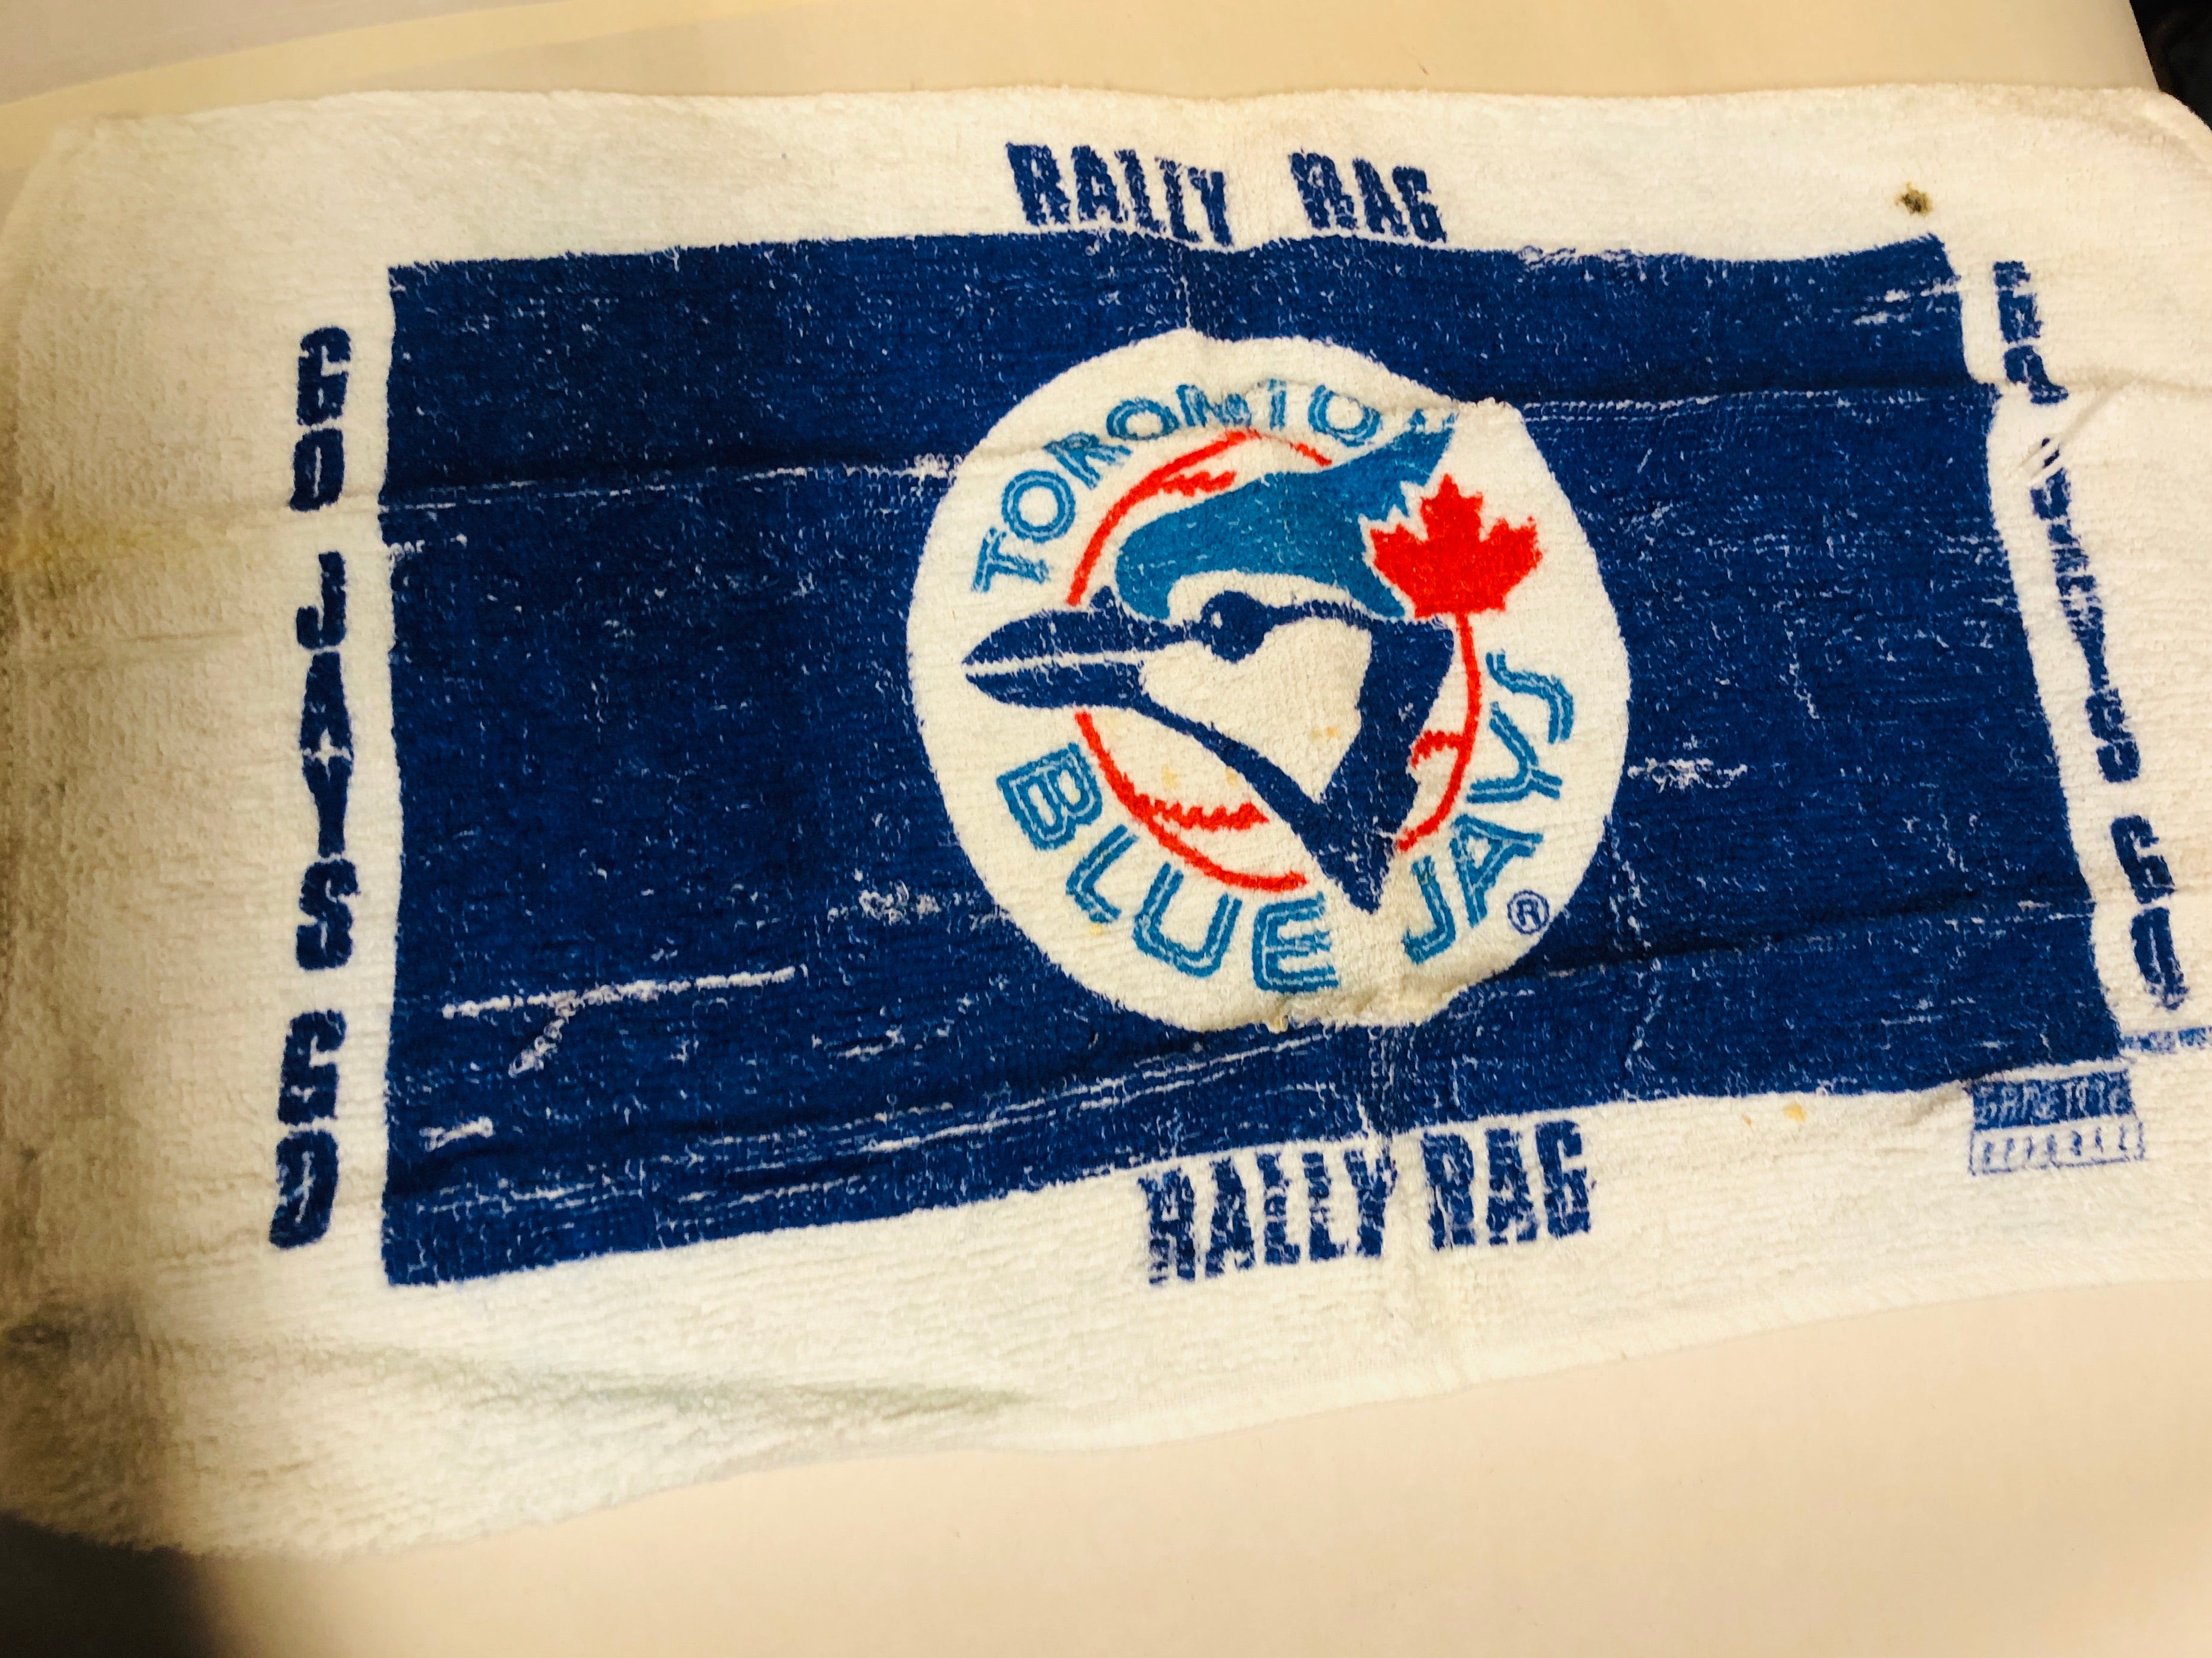 Toronto Blue Jays baseball rally tag 1990s